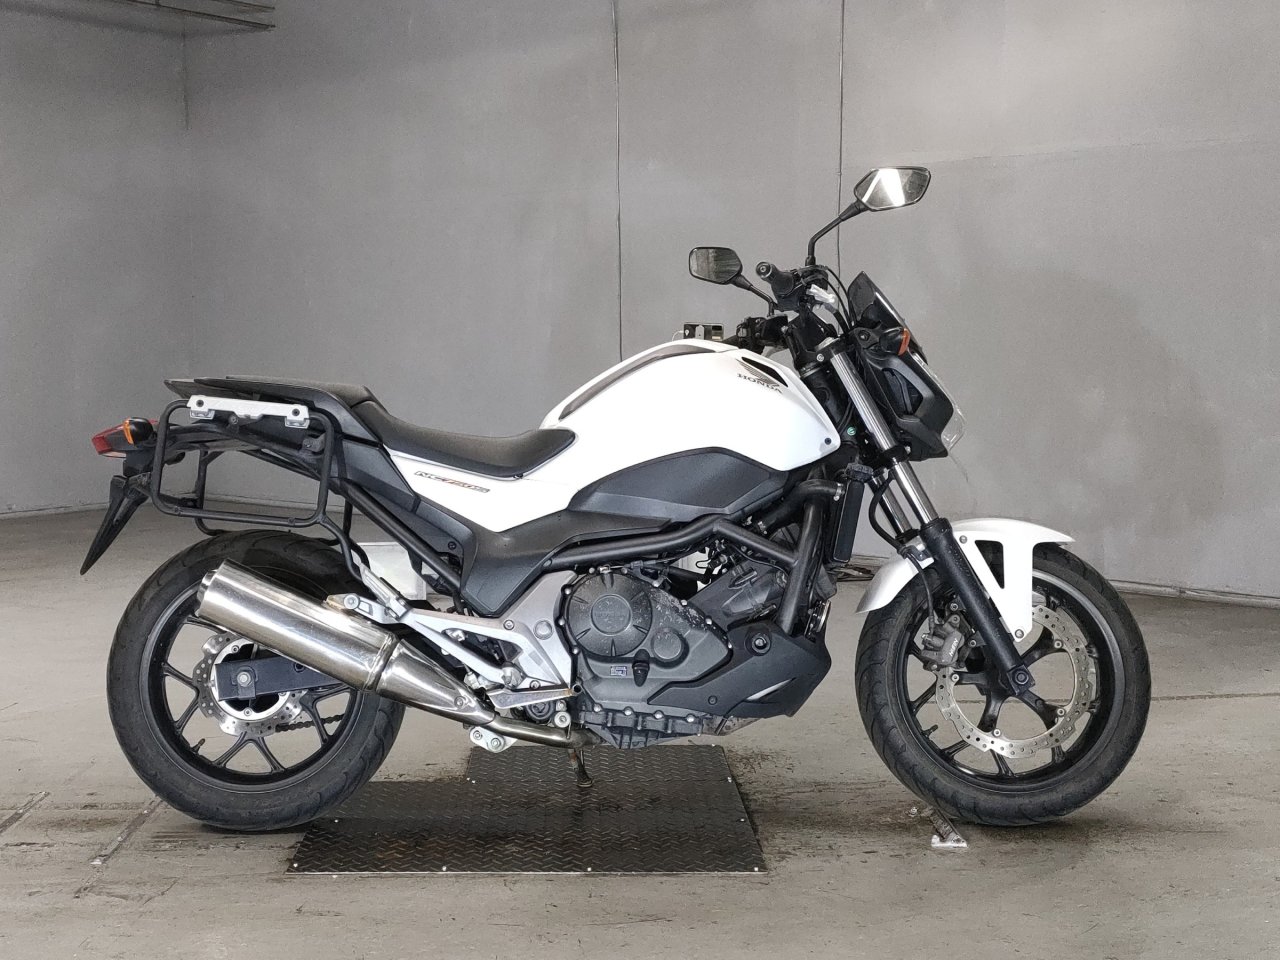 Honda NC750S - Adamoto - Motorcycles from Japan